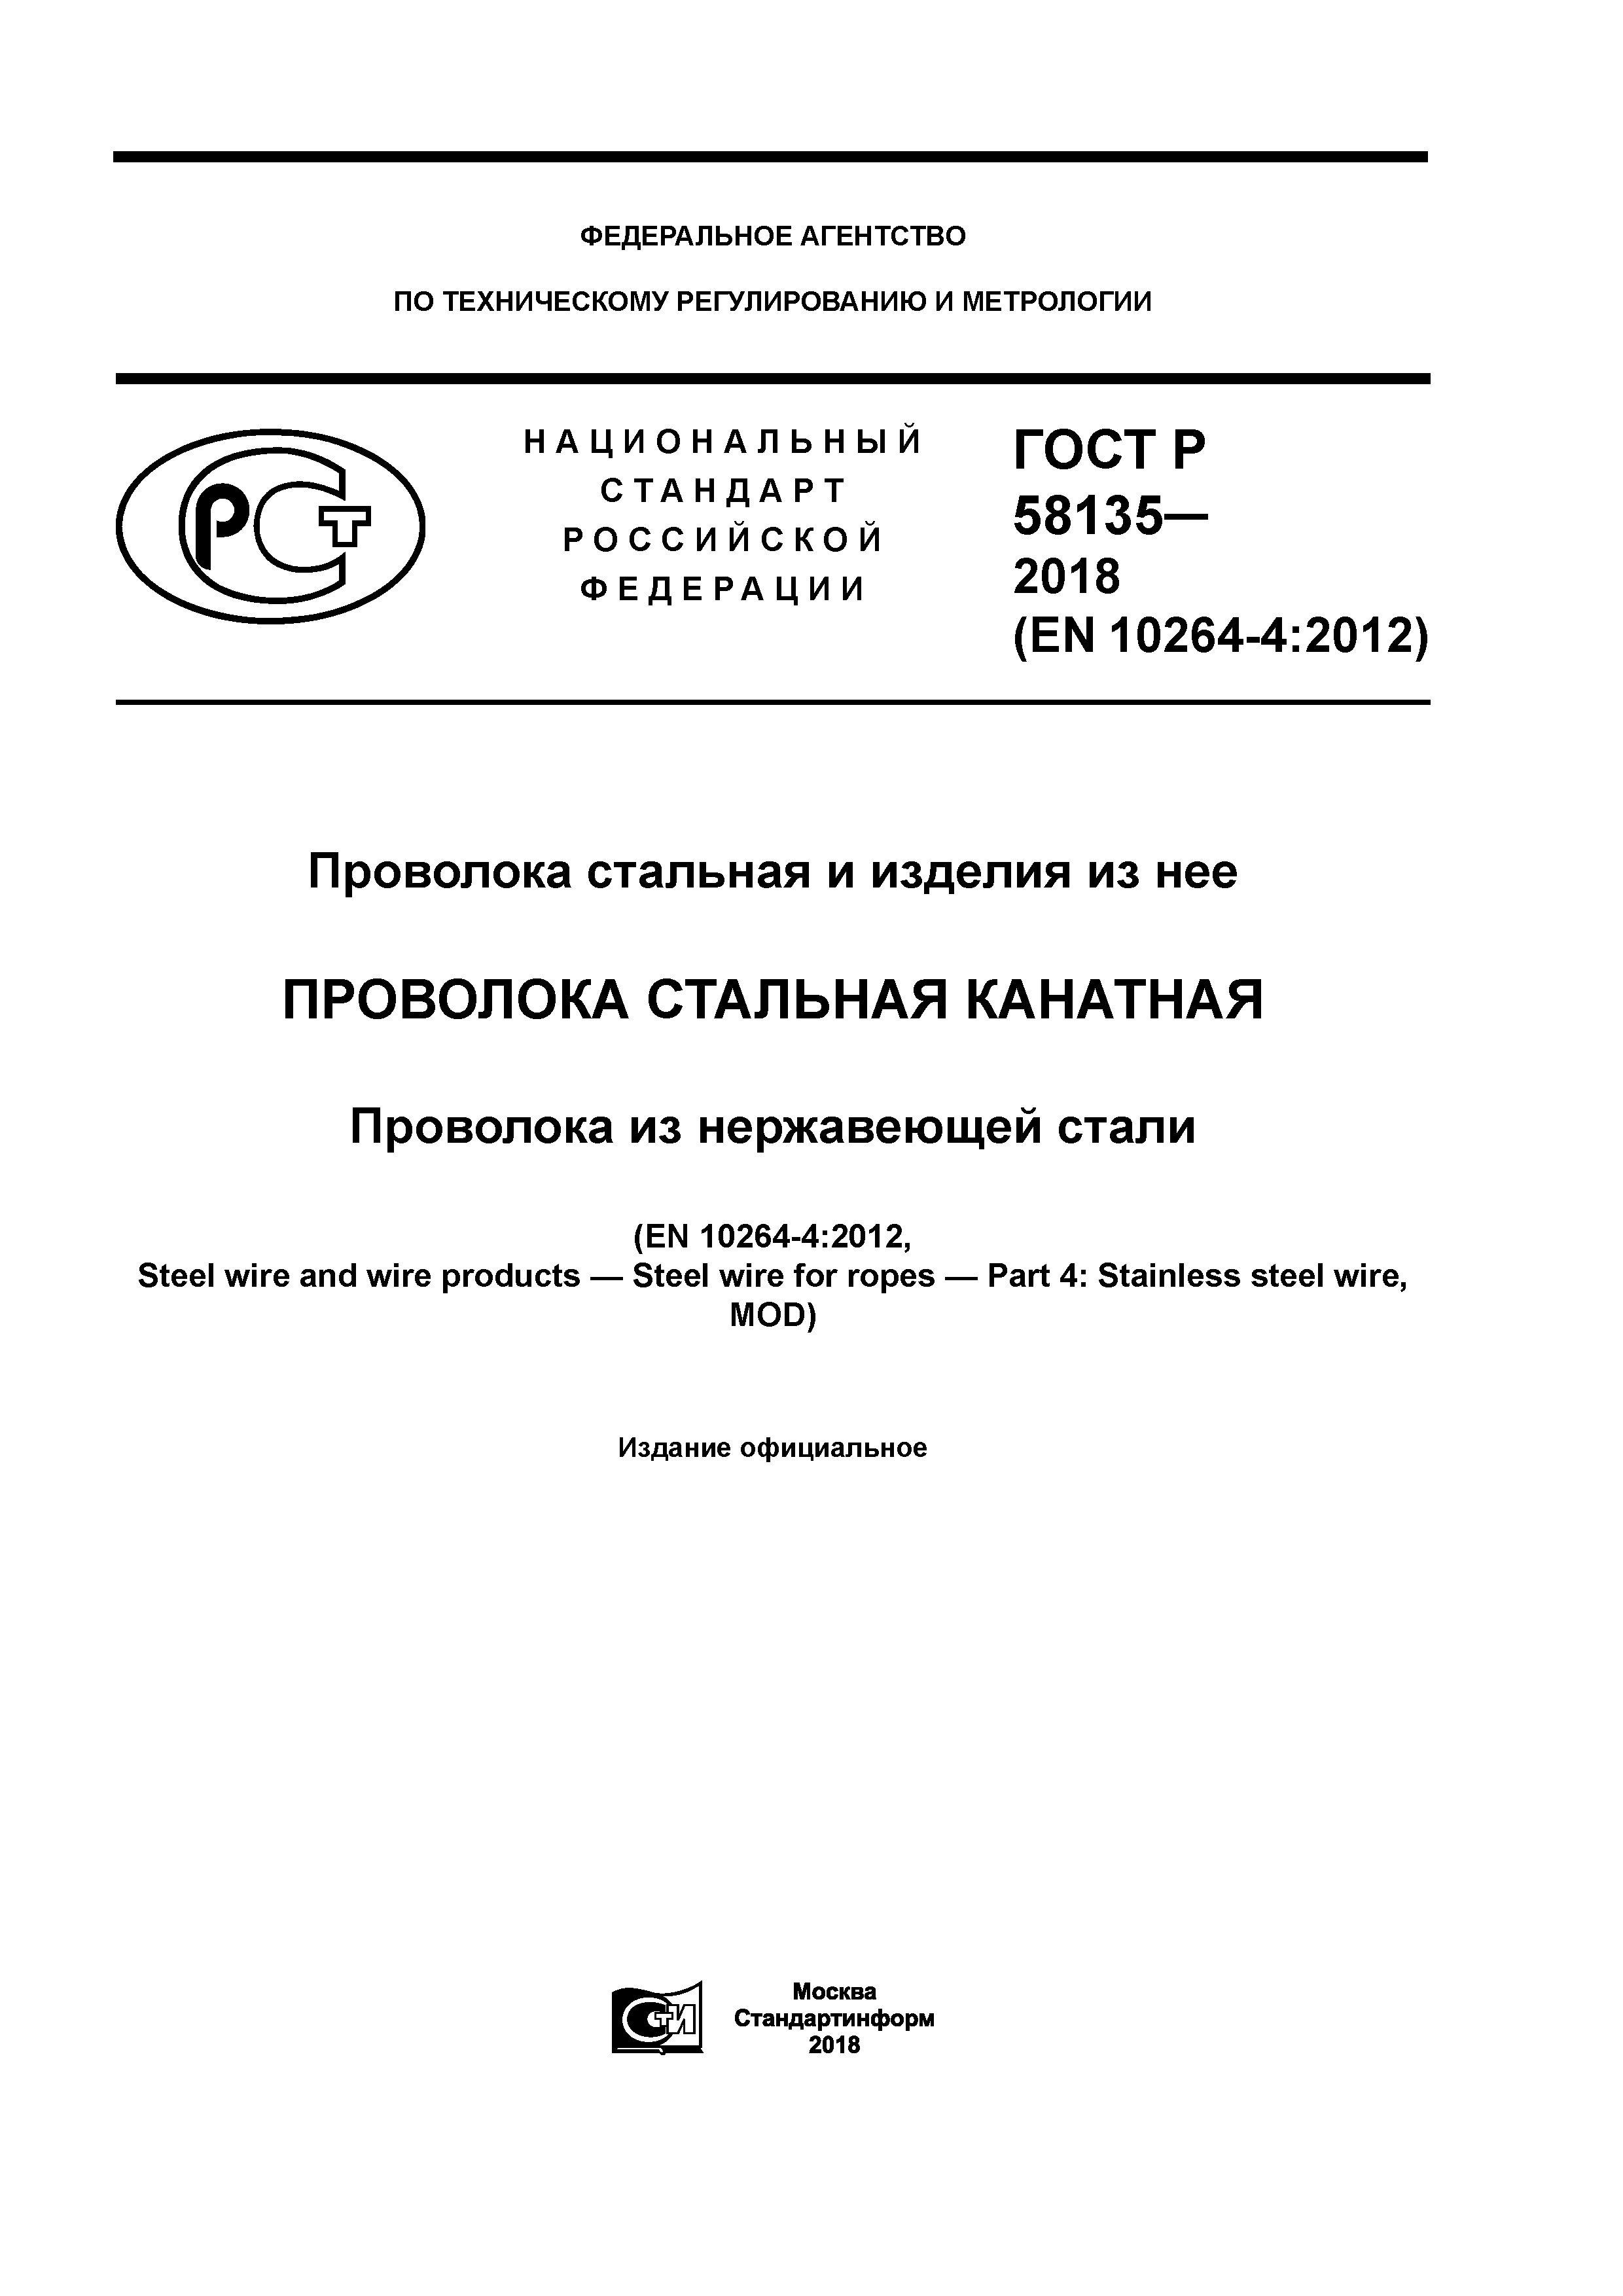 ГОСТ Р 58135-2018